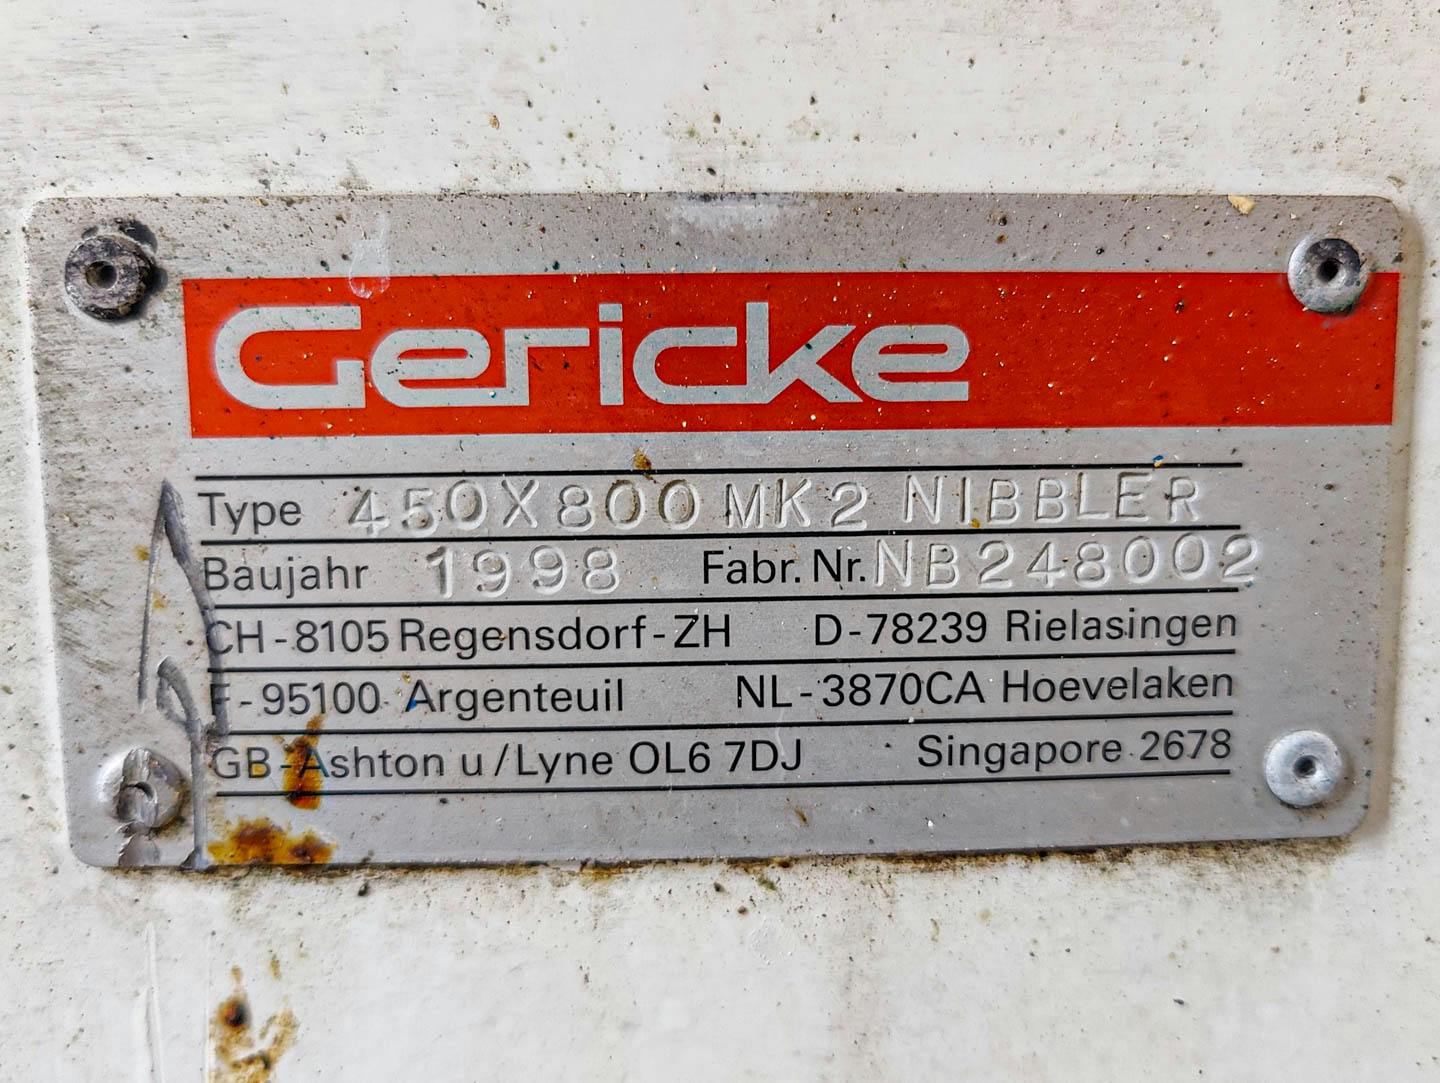 Gericke 450x800 MK2 NIBBLER - Sítový granulátor - image 11